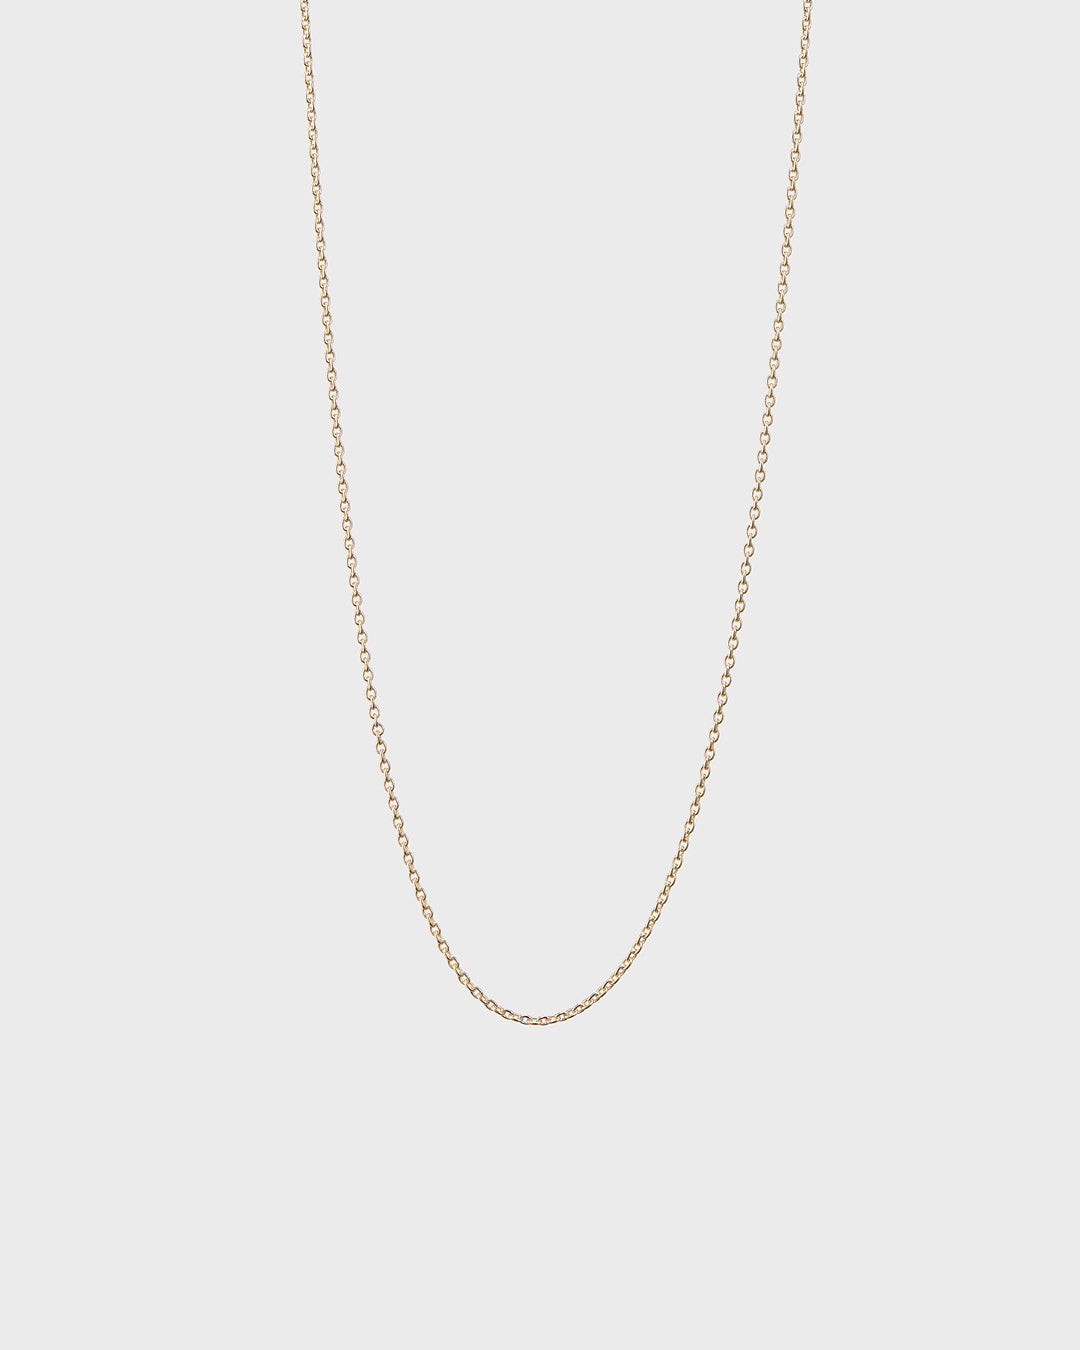 Amulet Chain 40-60 cm adjustable bronze